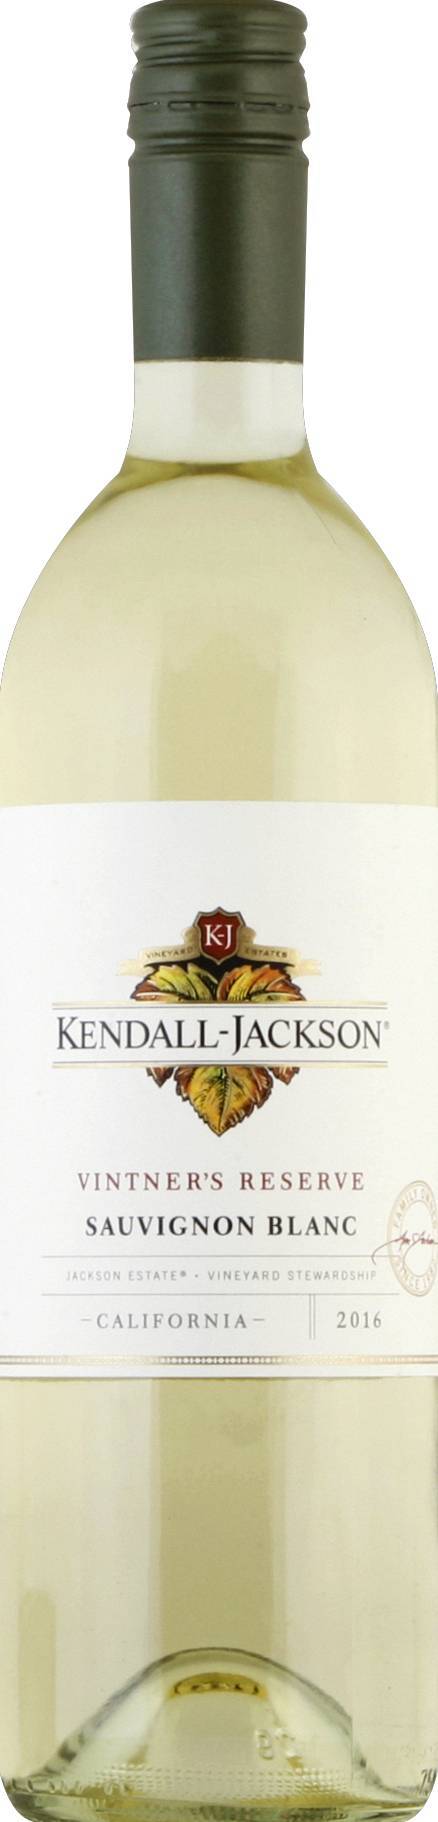 Kendall-Jackson Vintner's Reserve Sauvignon Blanc White Wine 2016 (750 ml)